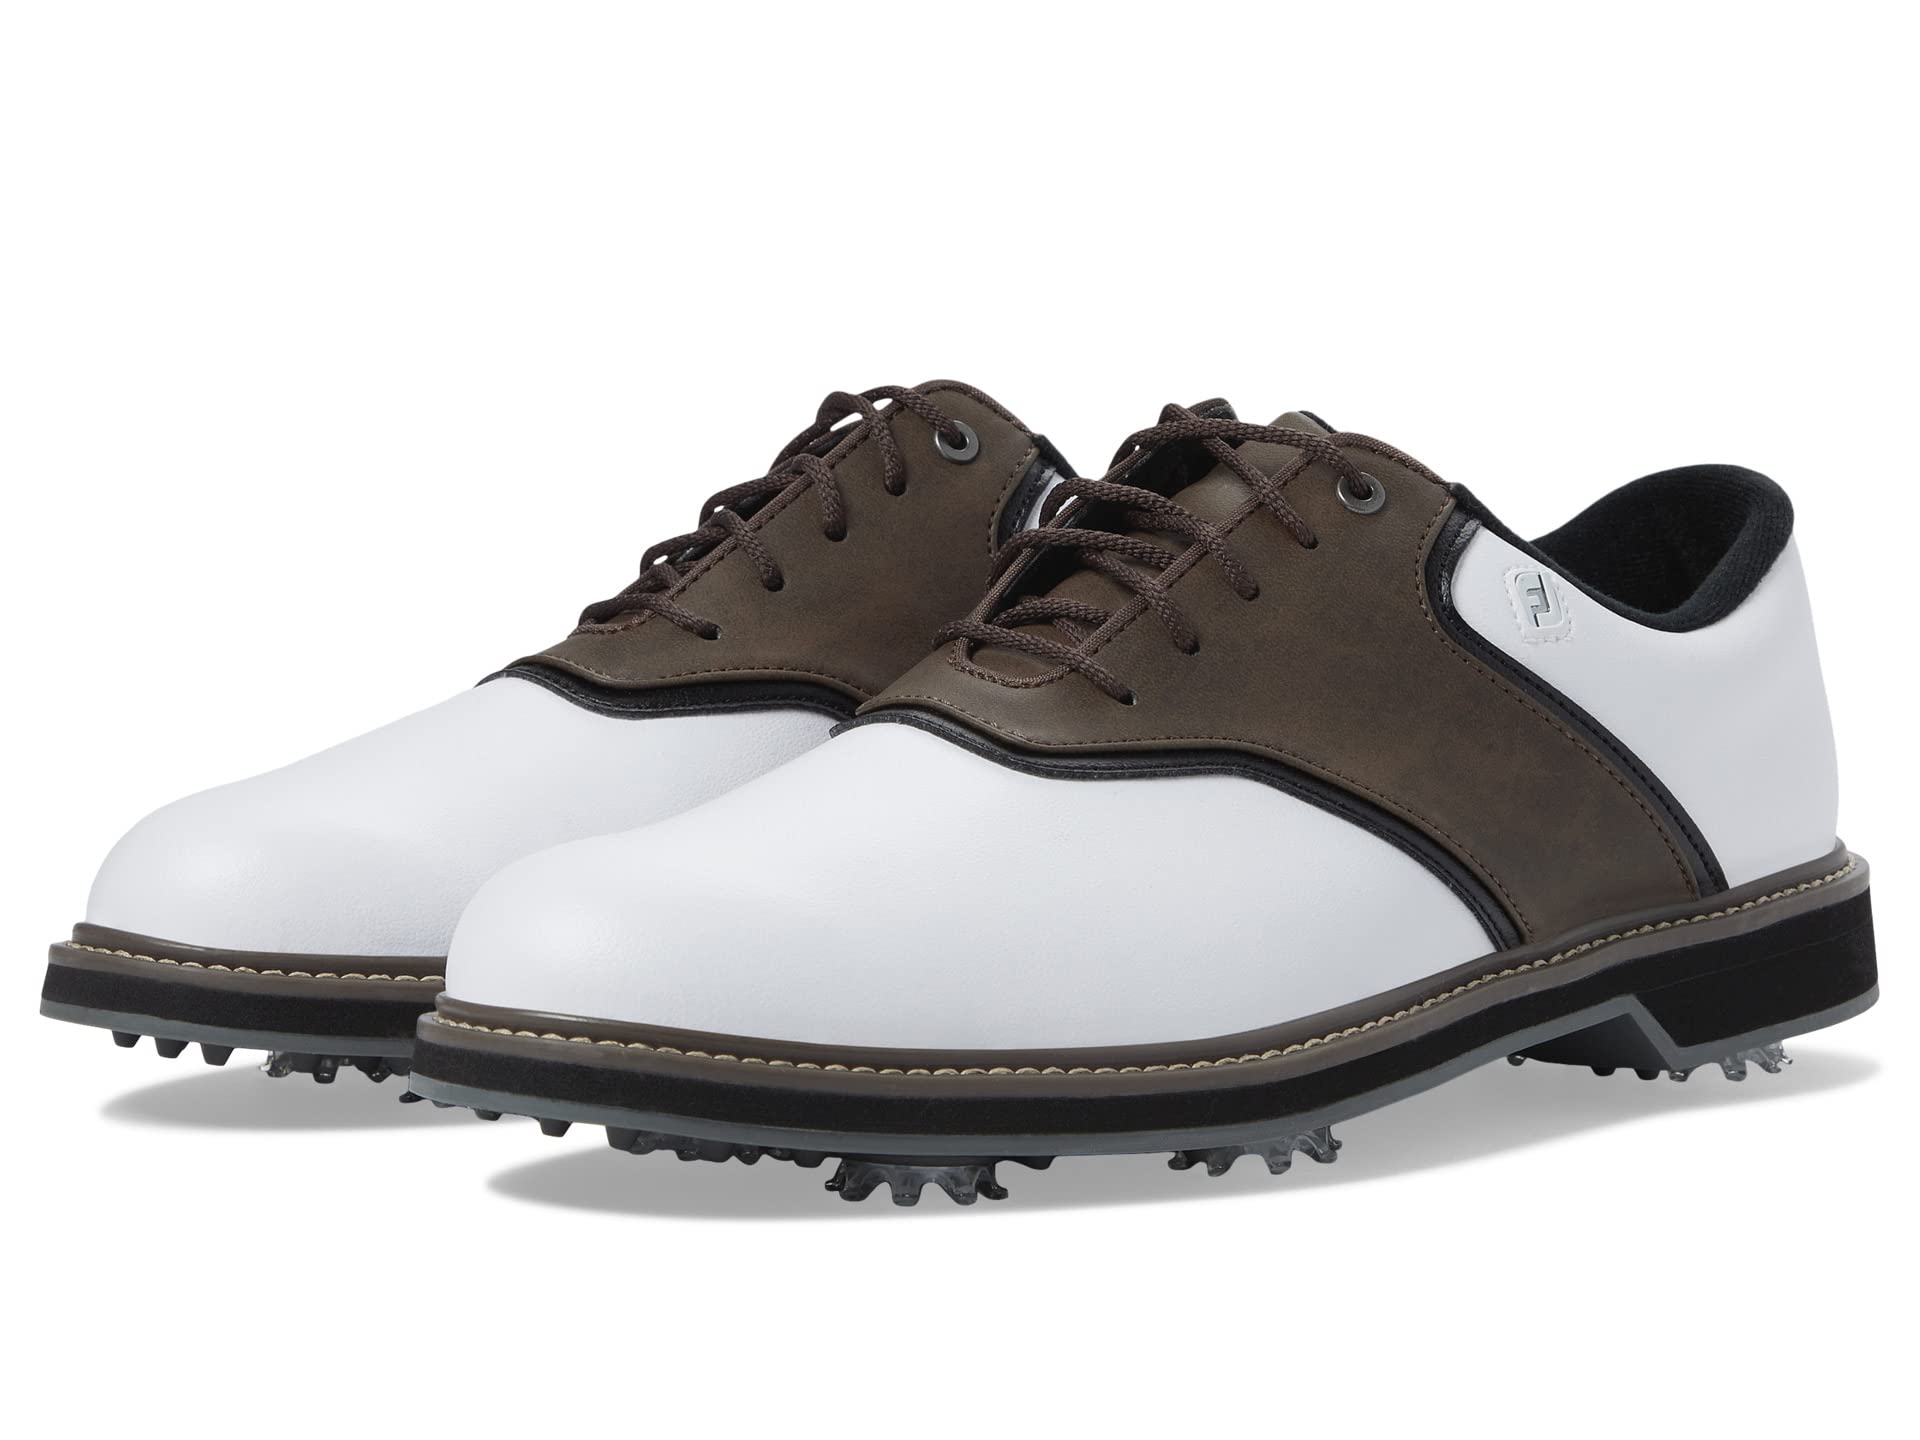 FJ Originals Golf Shoes - Previous Season Style FootJoy